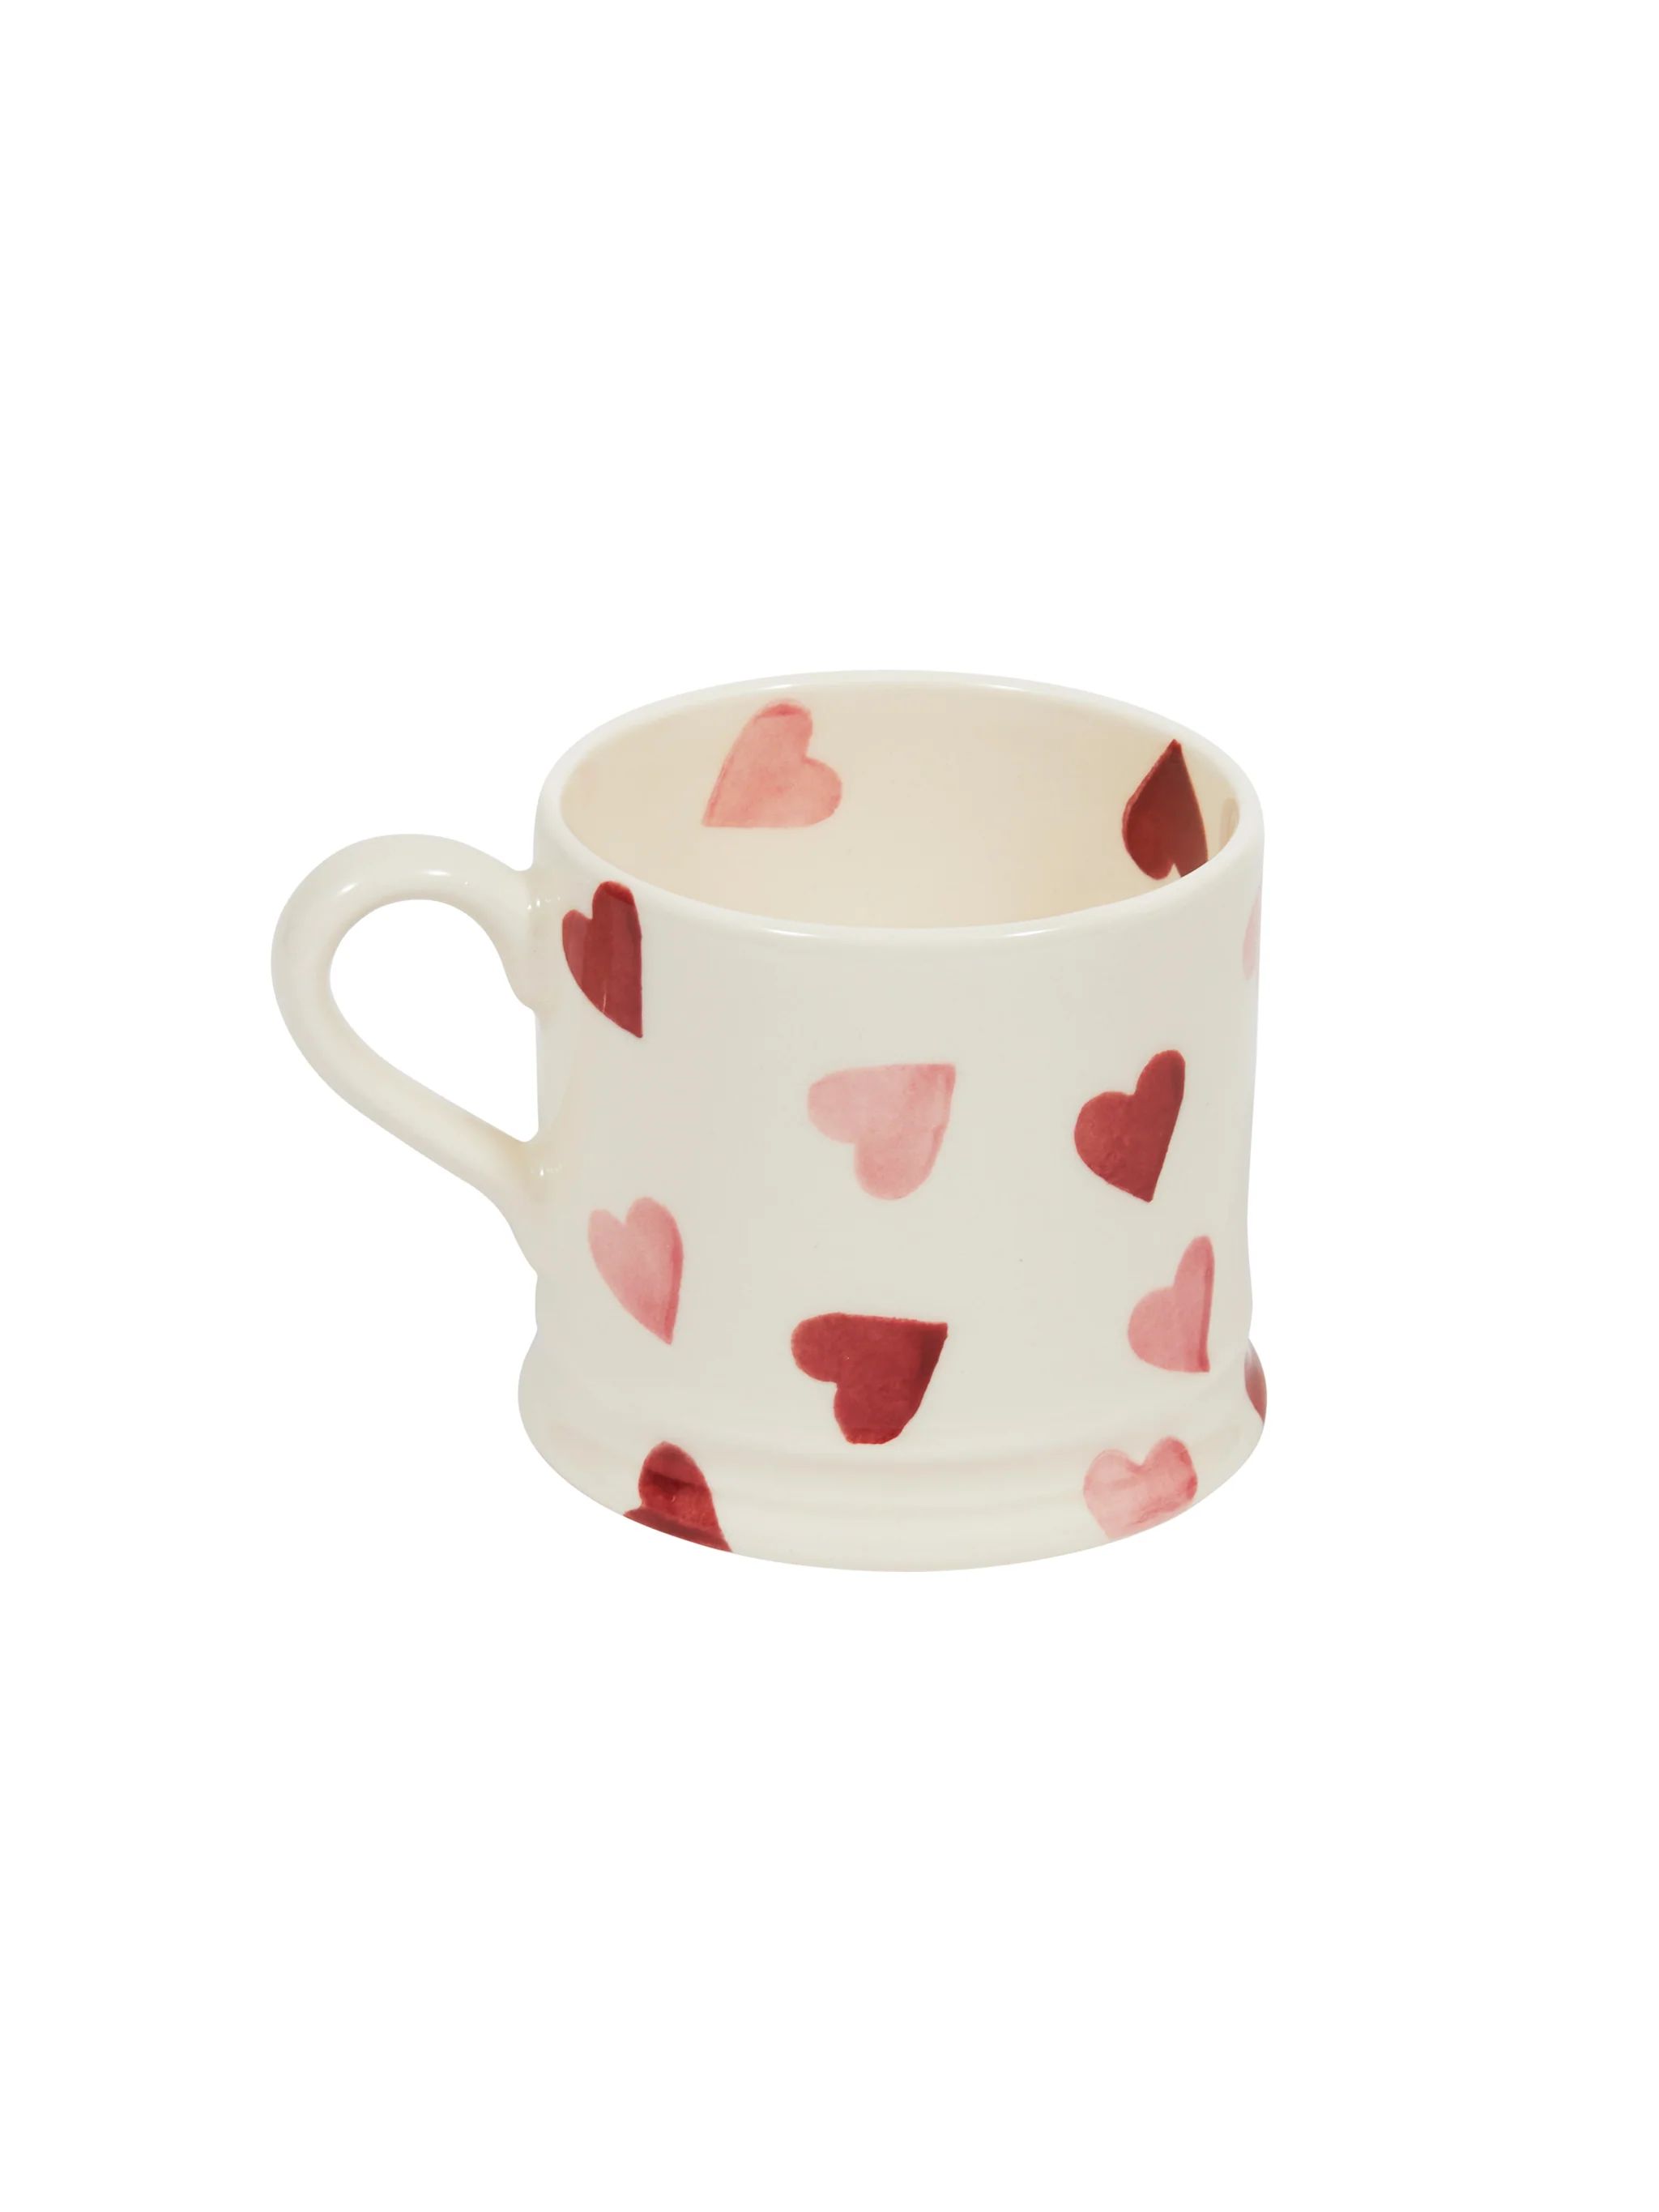 Emma Bridgewater Pink Hearts Small Mug | Weston Table